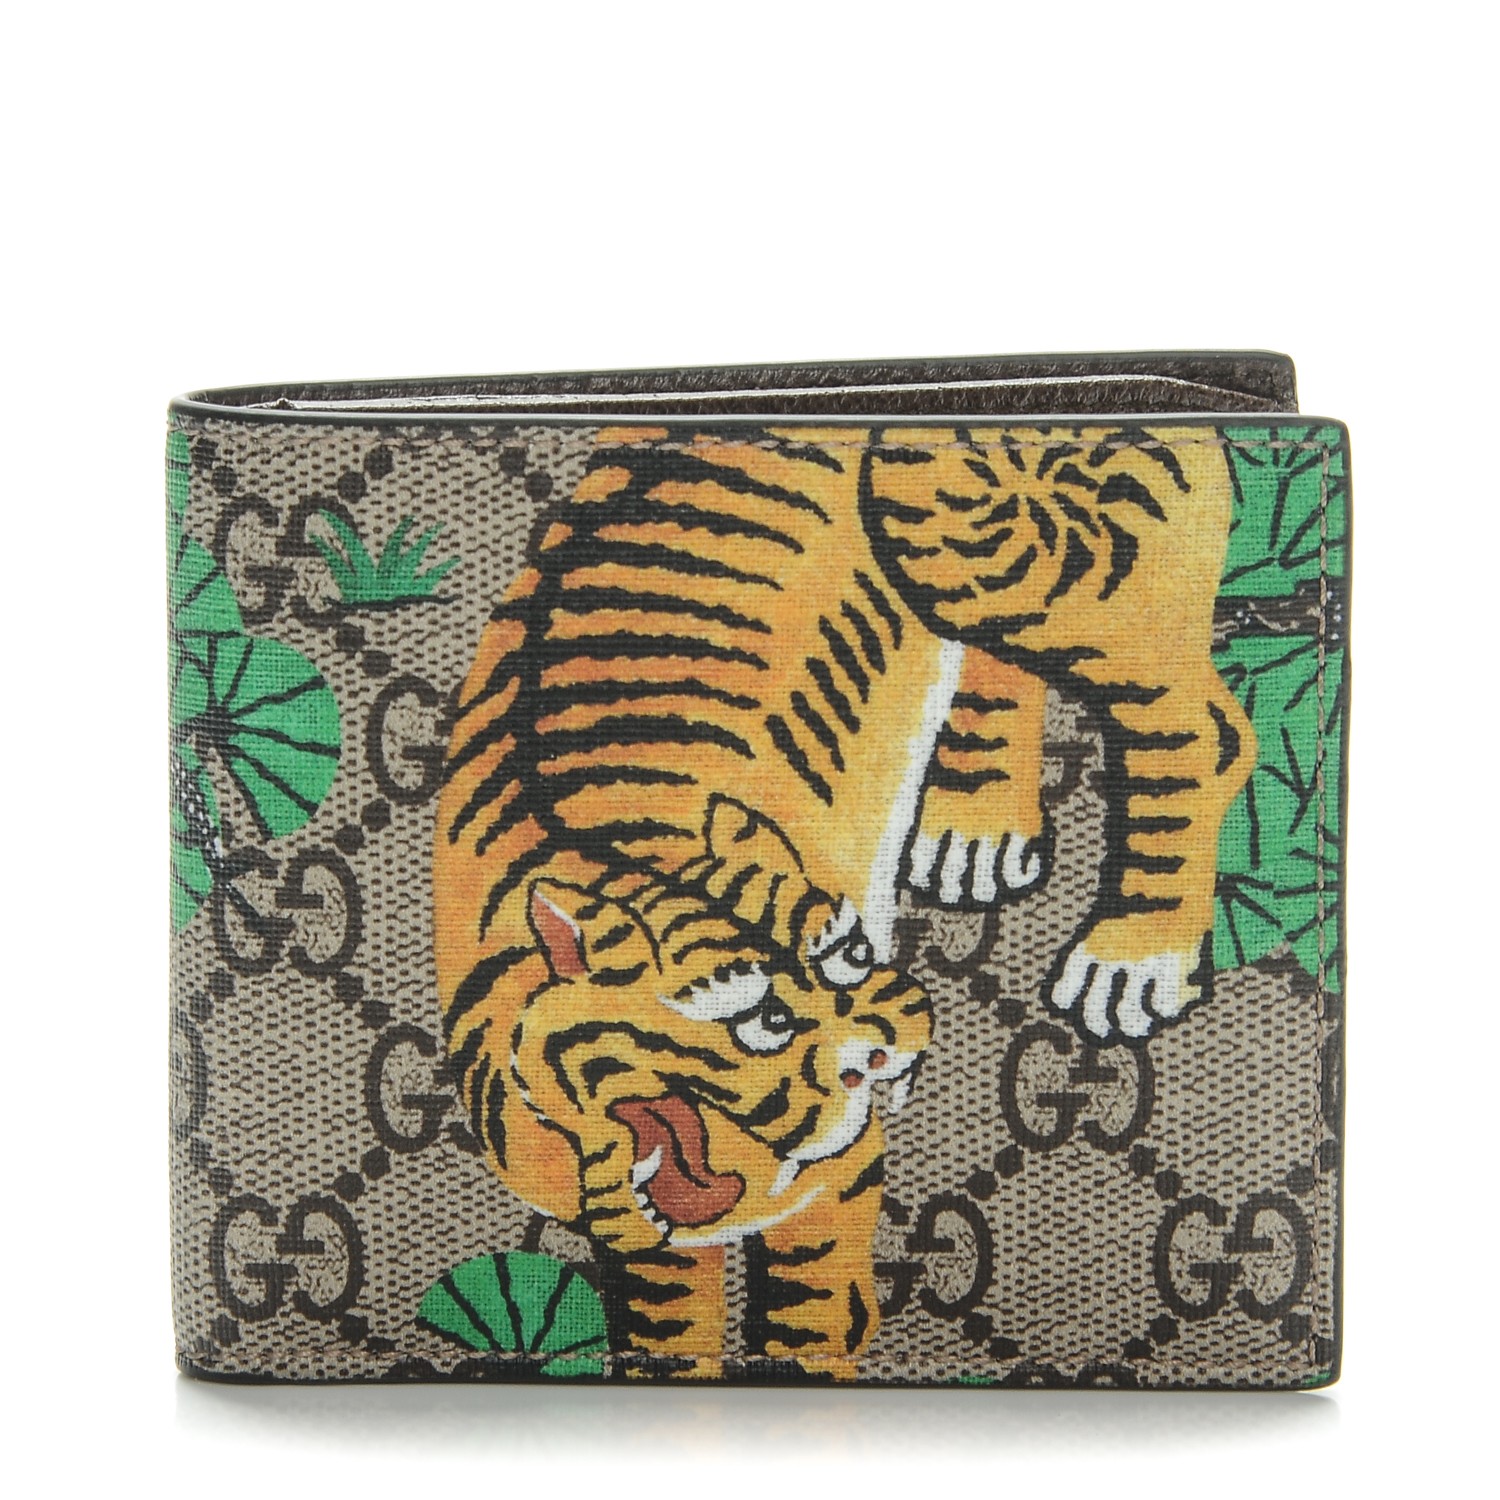 AJF.gucci bengal tiger wallet,OFF 65% - www.concordehotels.com.tr